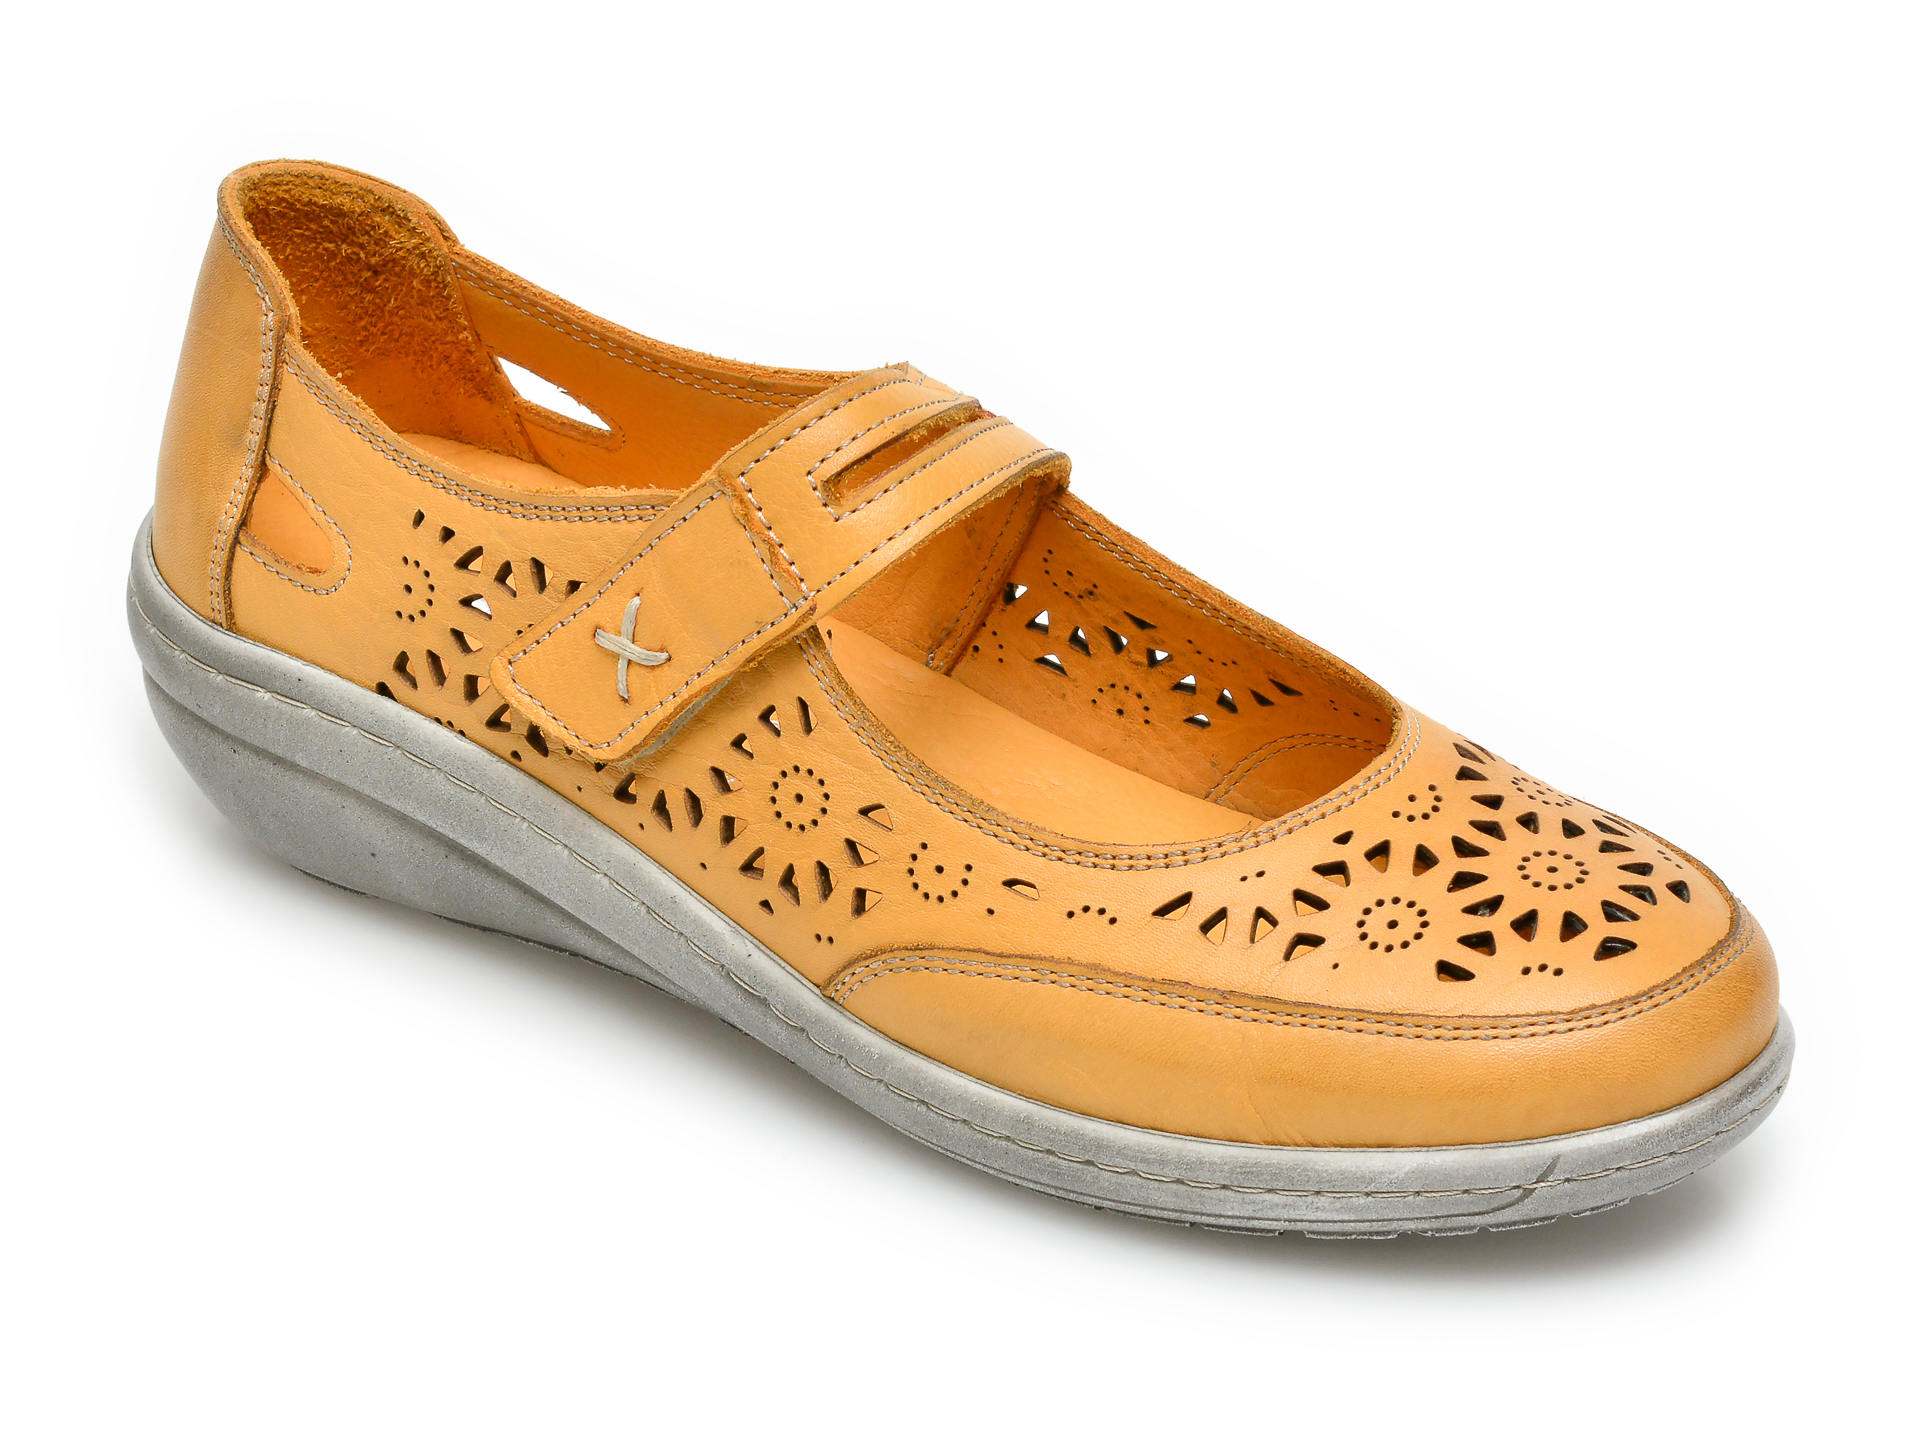 Pantofi PASS COLLECTION galbeni, 62050, din piele naturala otter.ro otter.ro